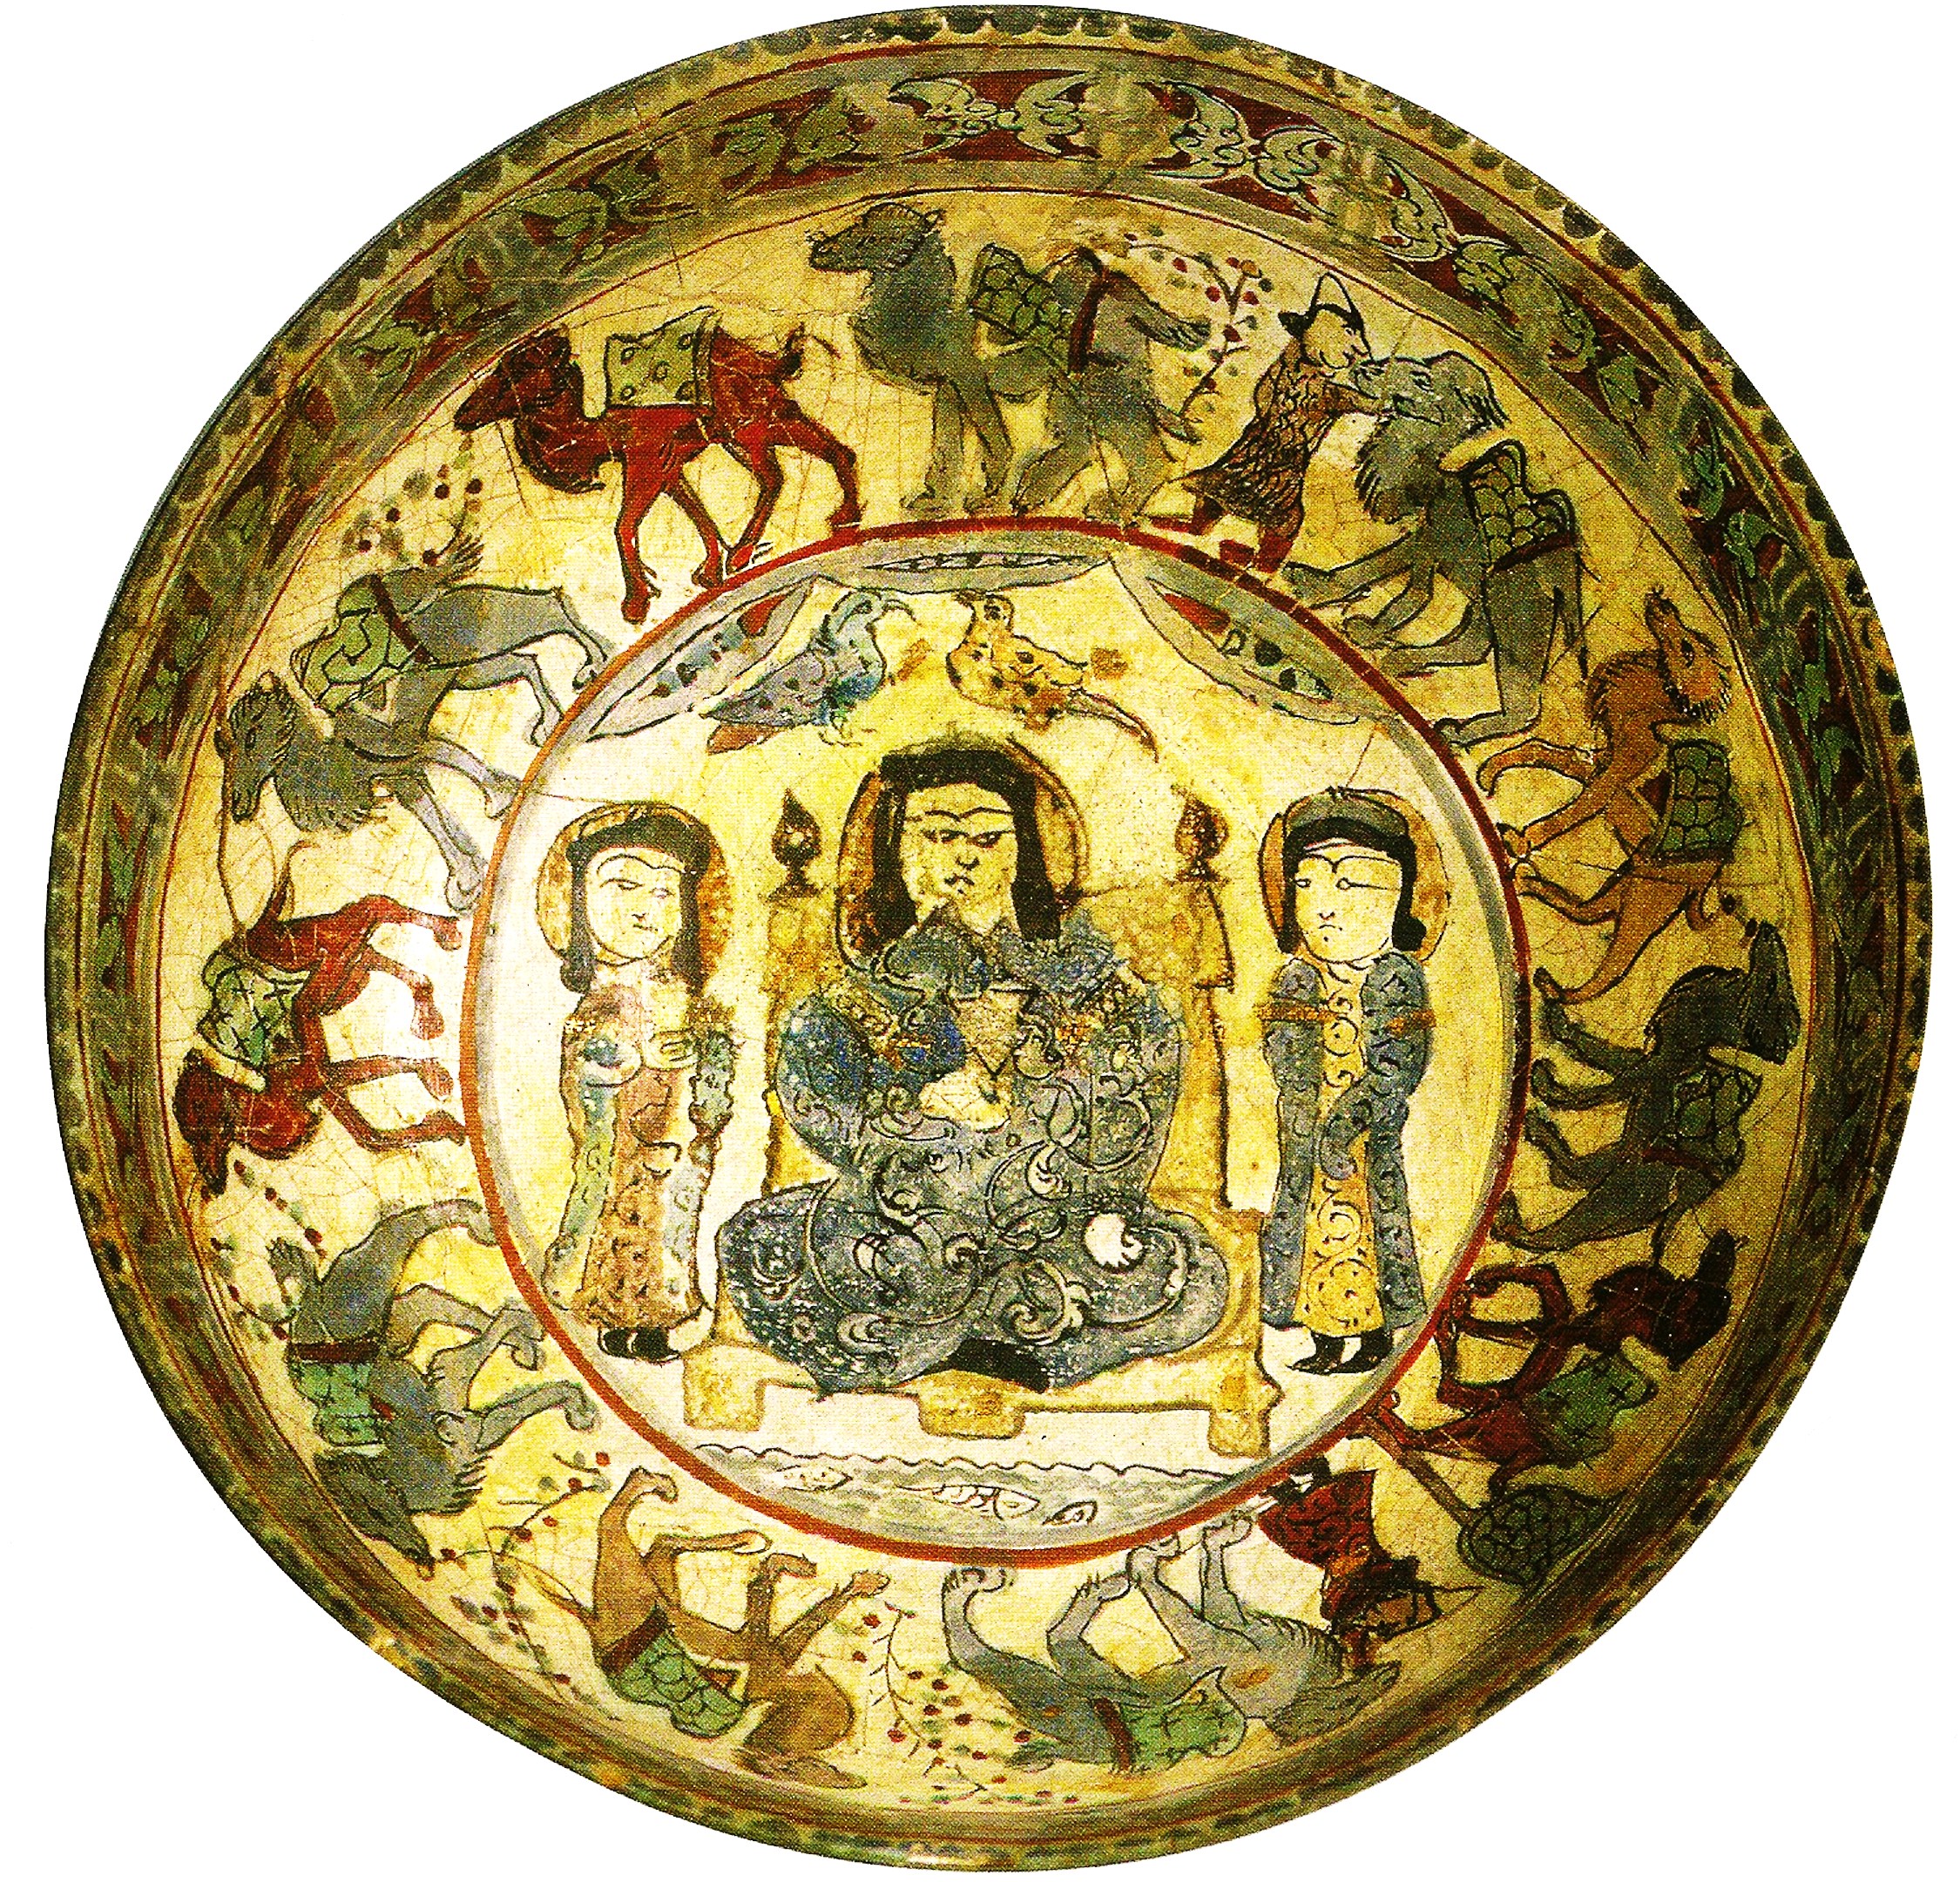 Decorative plate depicting Silk Road caravan scene